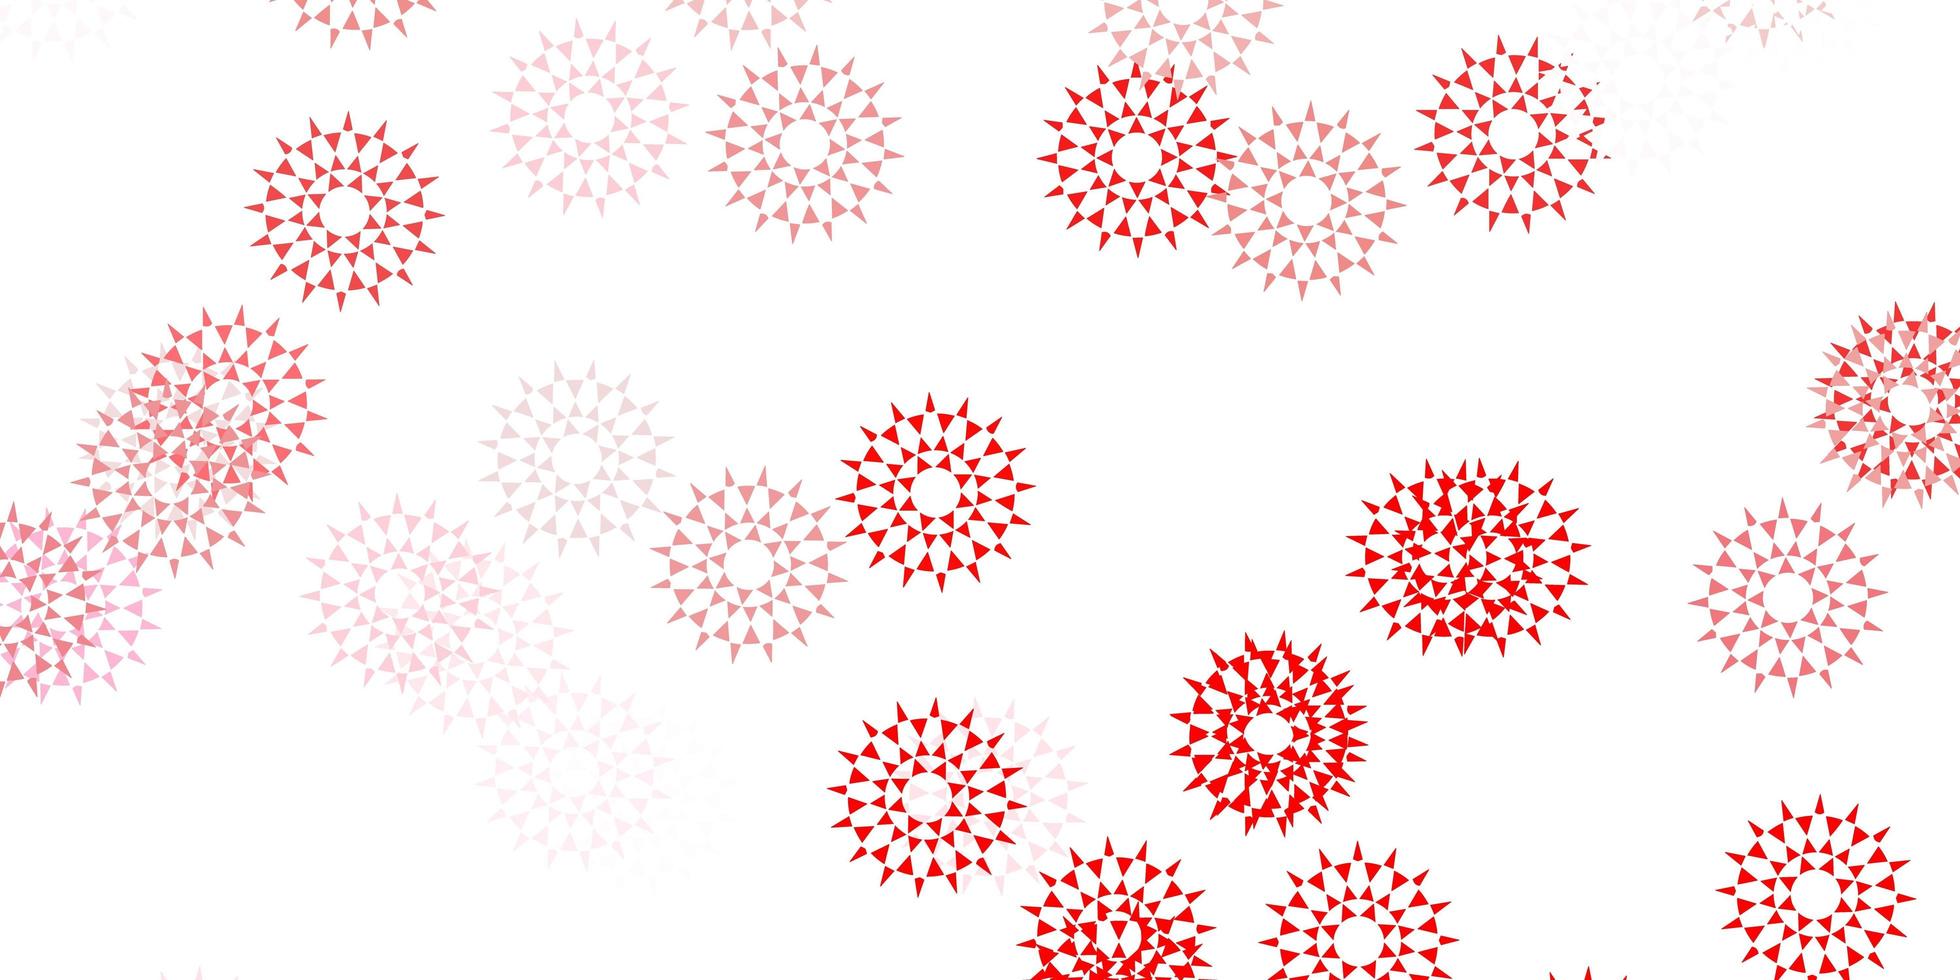 diseño natural de vector rojo claro con flores.